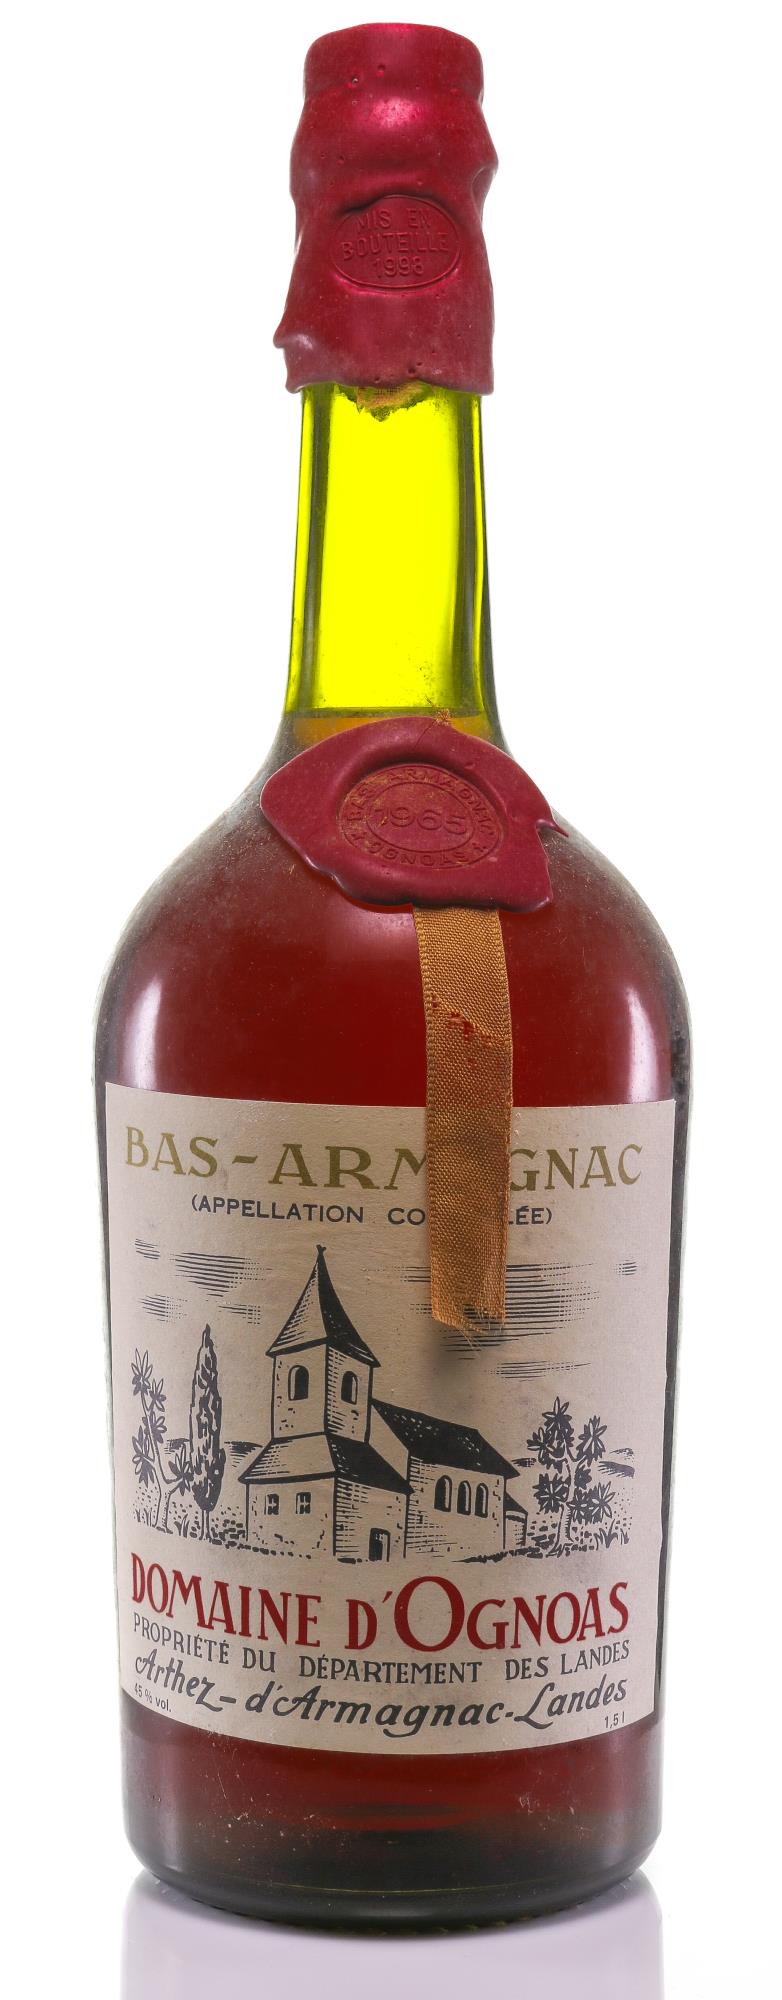 1965 Domaine d'Ognoas Bas-Armagnac, Magnum, Bottled 1998 - Rue Pinard